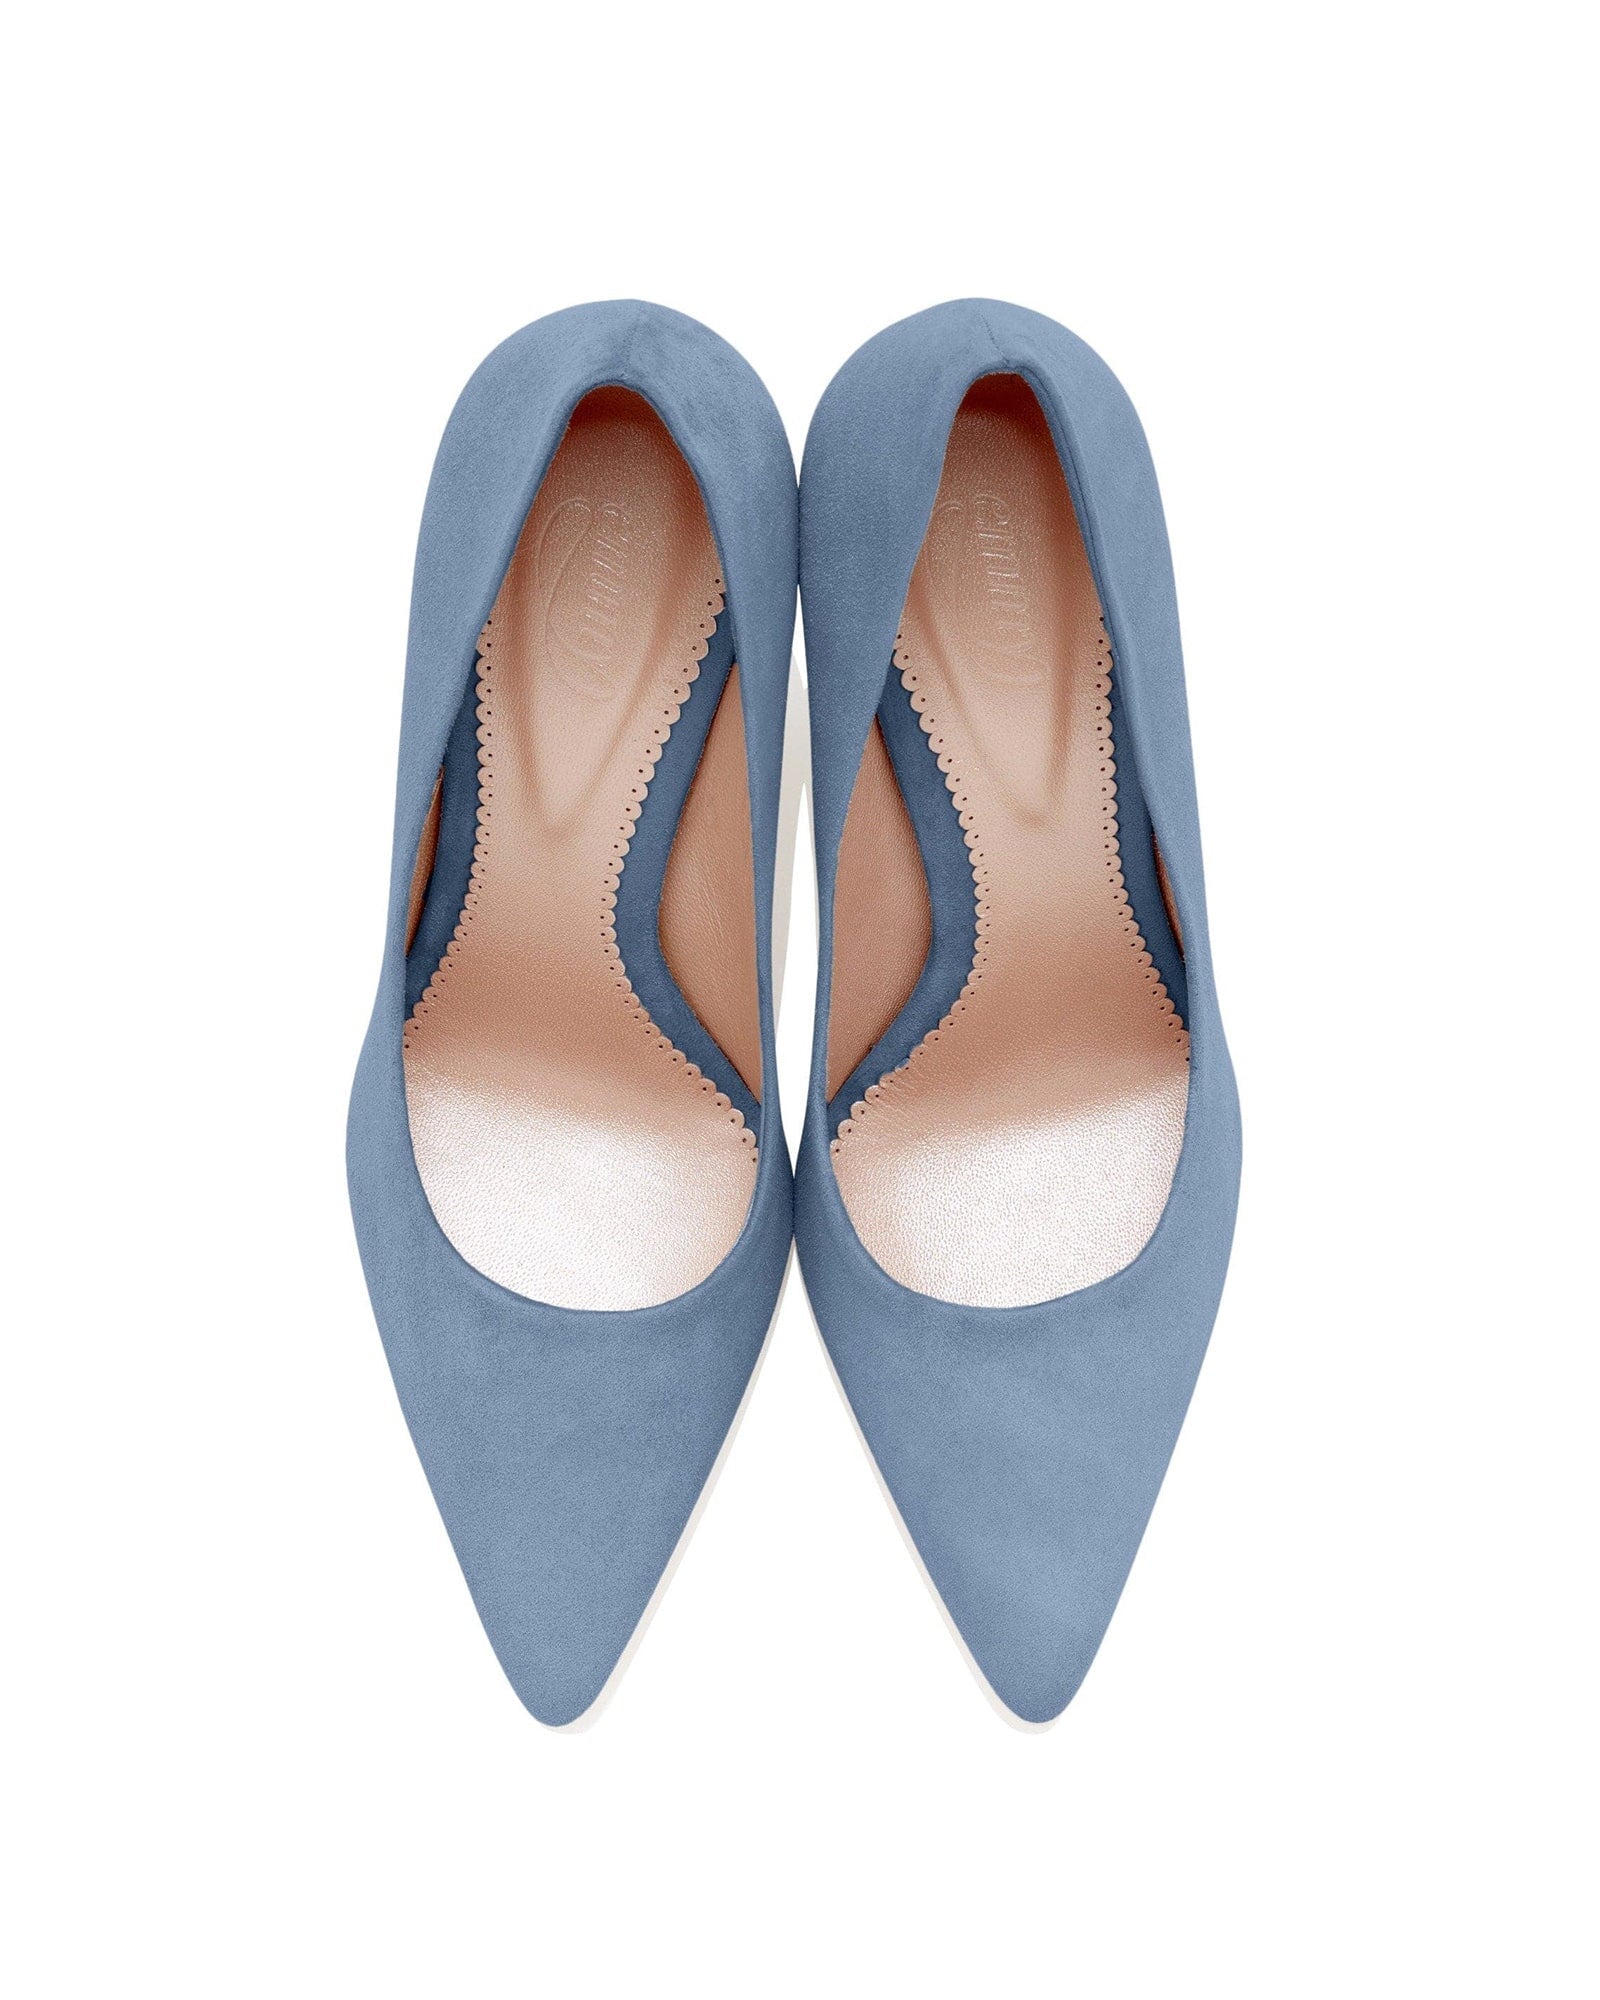 Olivia Powder Blue Fashion Shoe Blue Suede Pointed Court Shoes  image